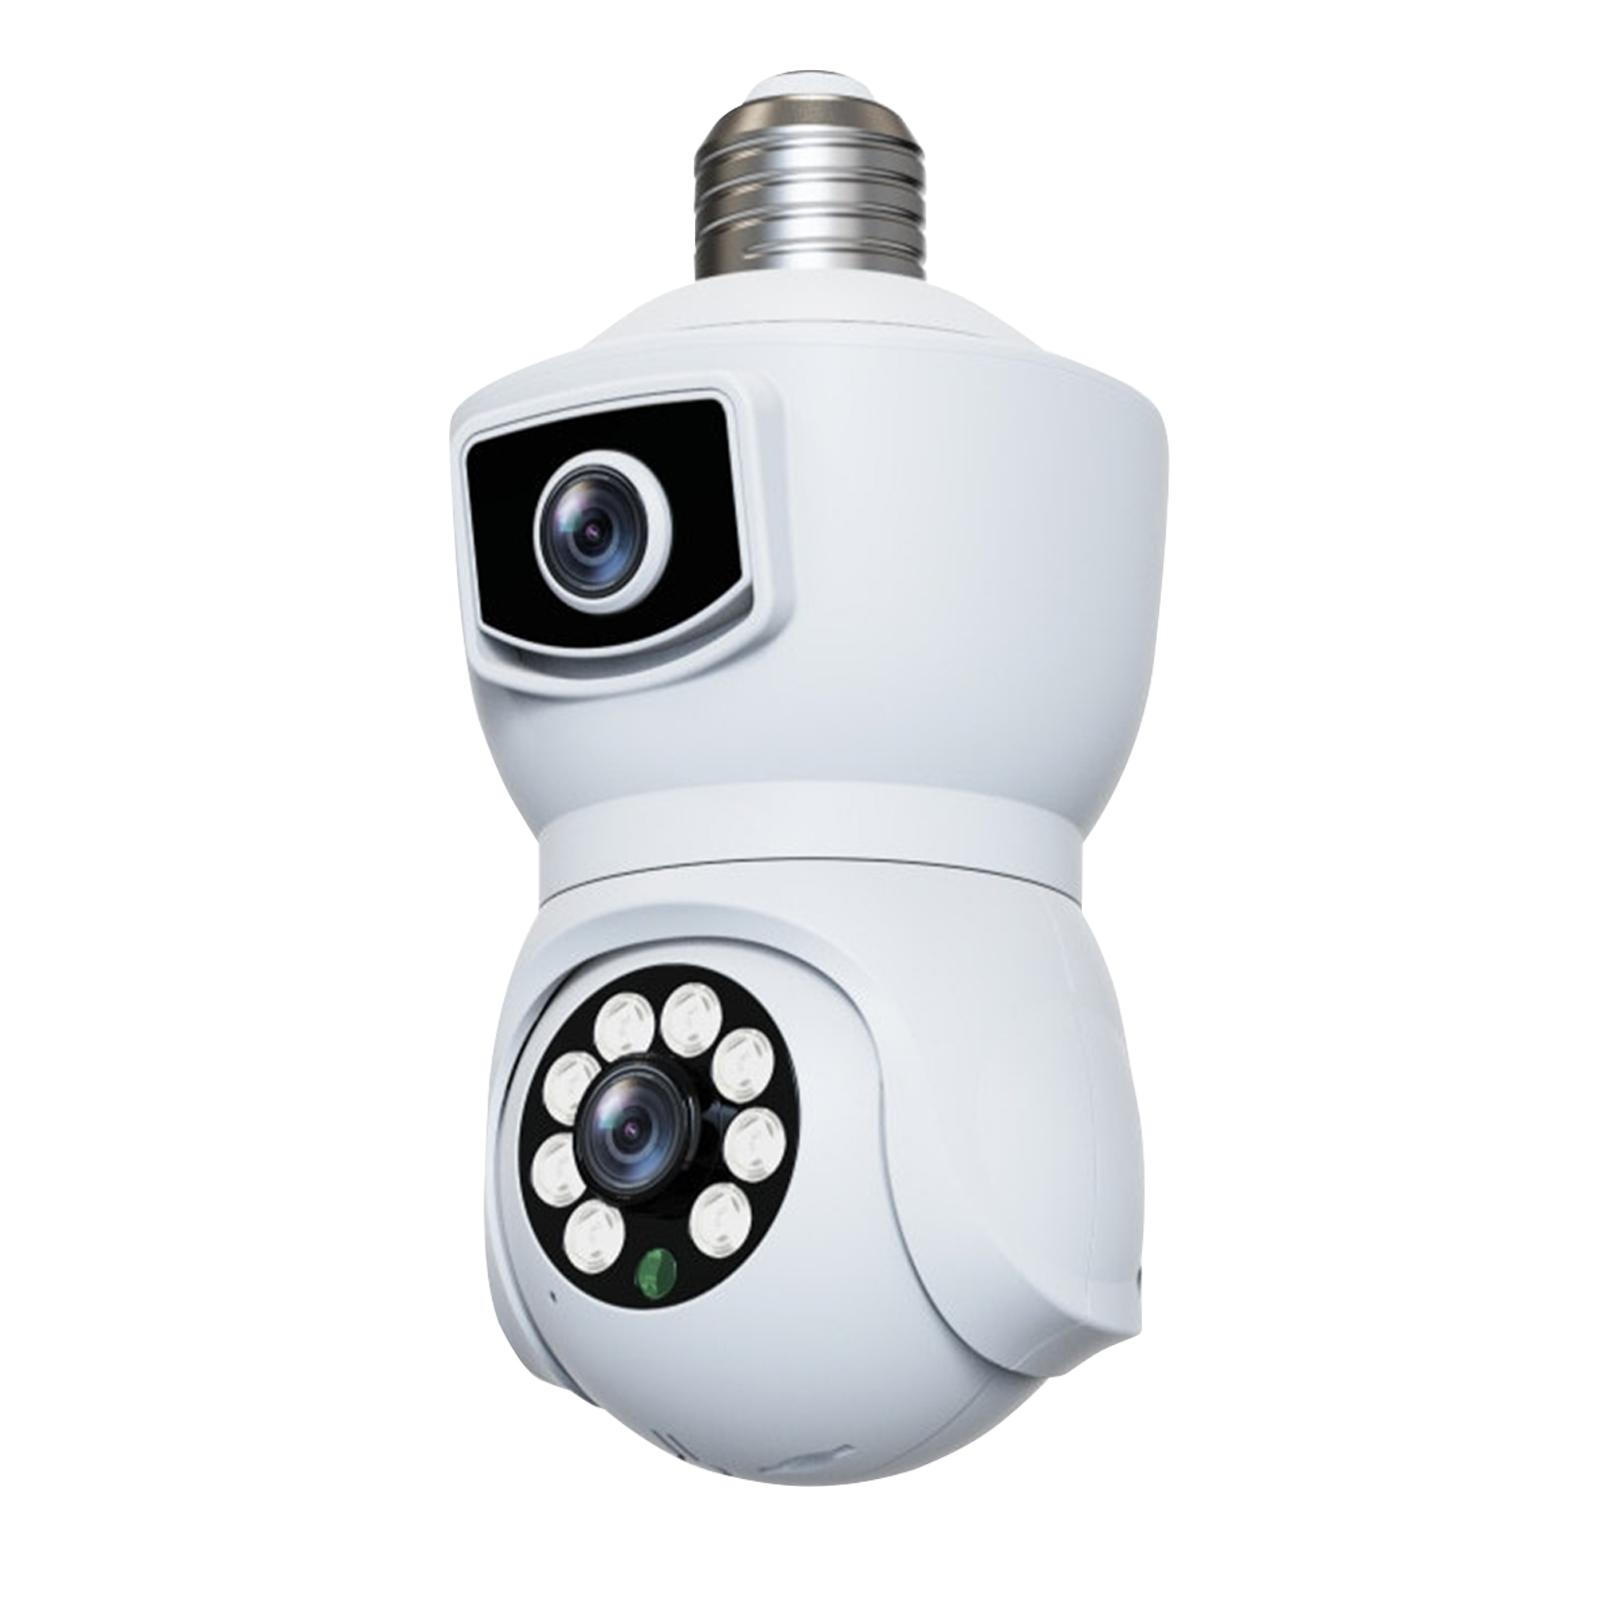 Light Bulb Security Camera WiFi Security Cameras Night Vision 10x Hybrid Zoom